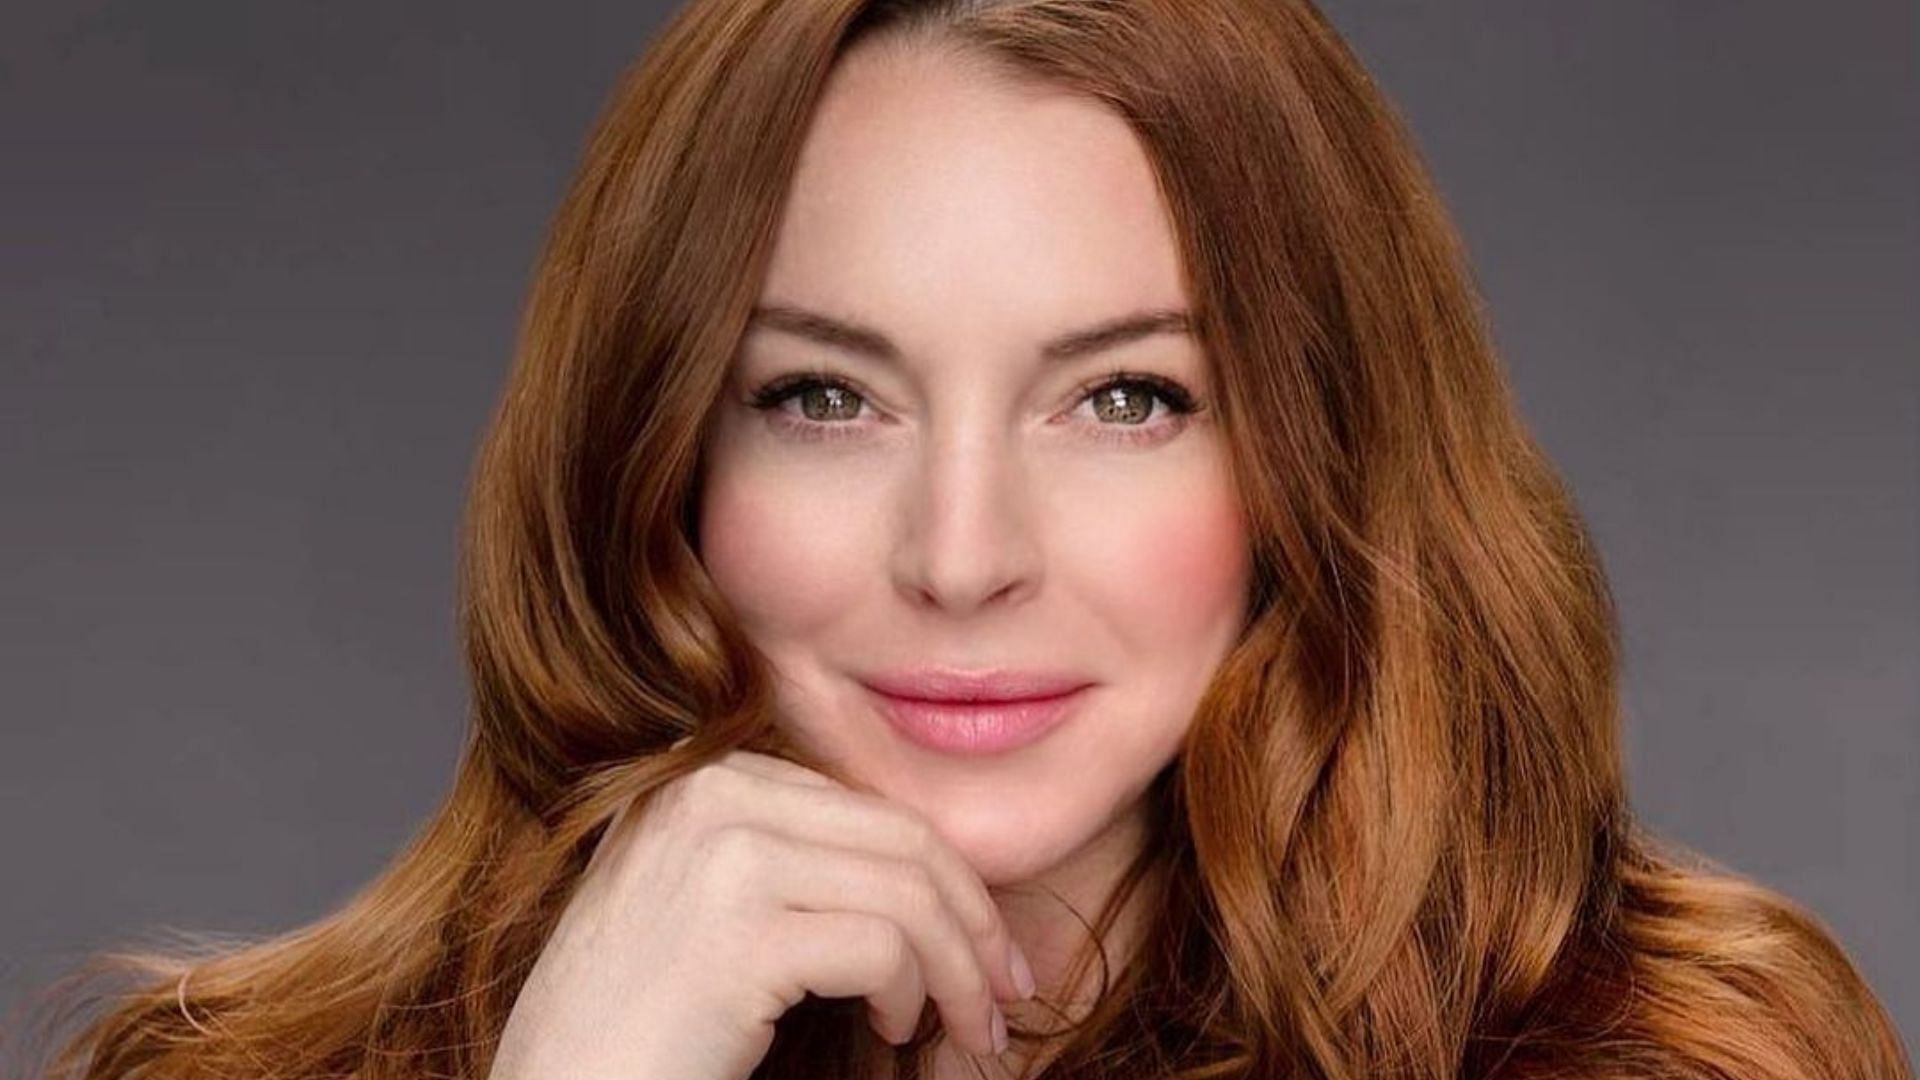 A still of Lindsay Lohan (Image Via lindsaylohan/Instagram)